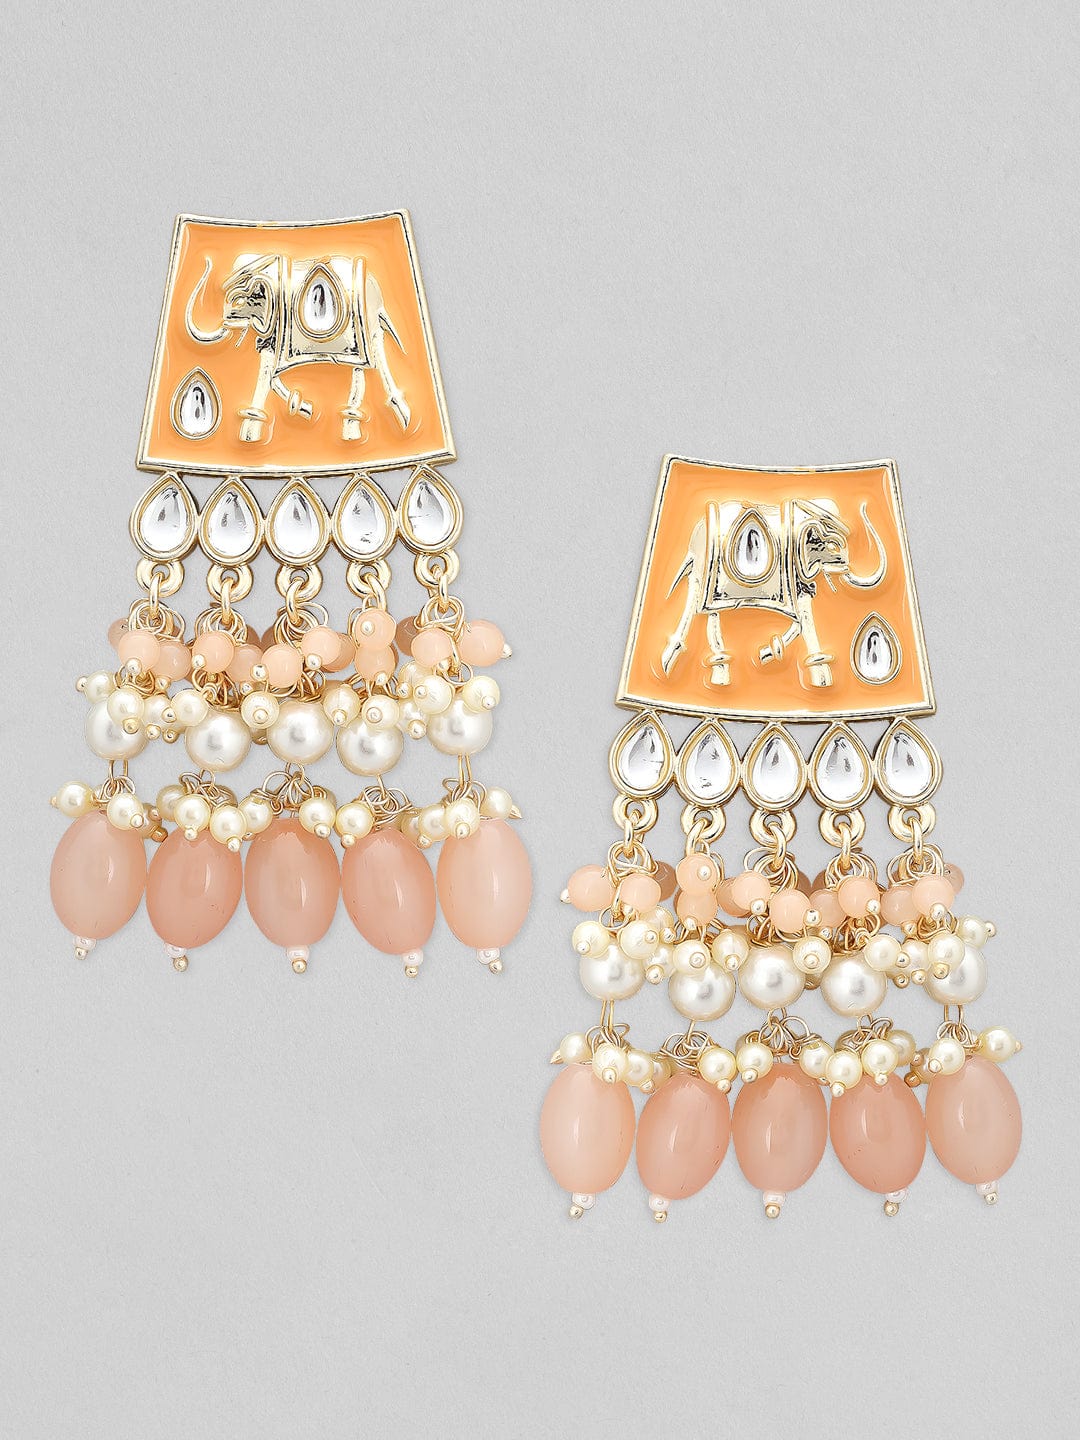 Rubans Gold Plated Orange Enamel Earrings With Orange Beads And Pearls. Earrings